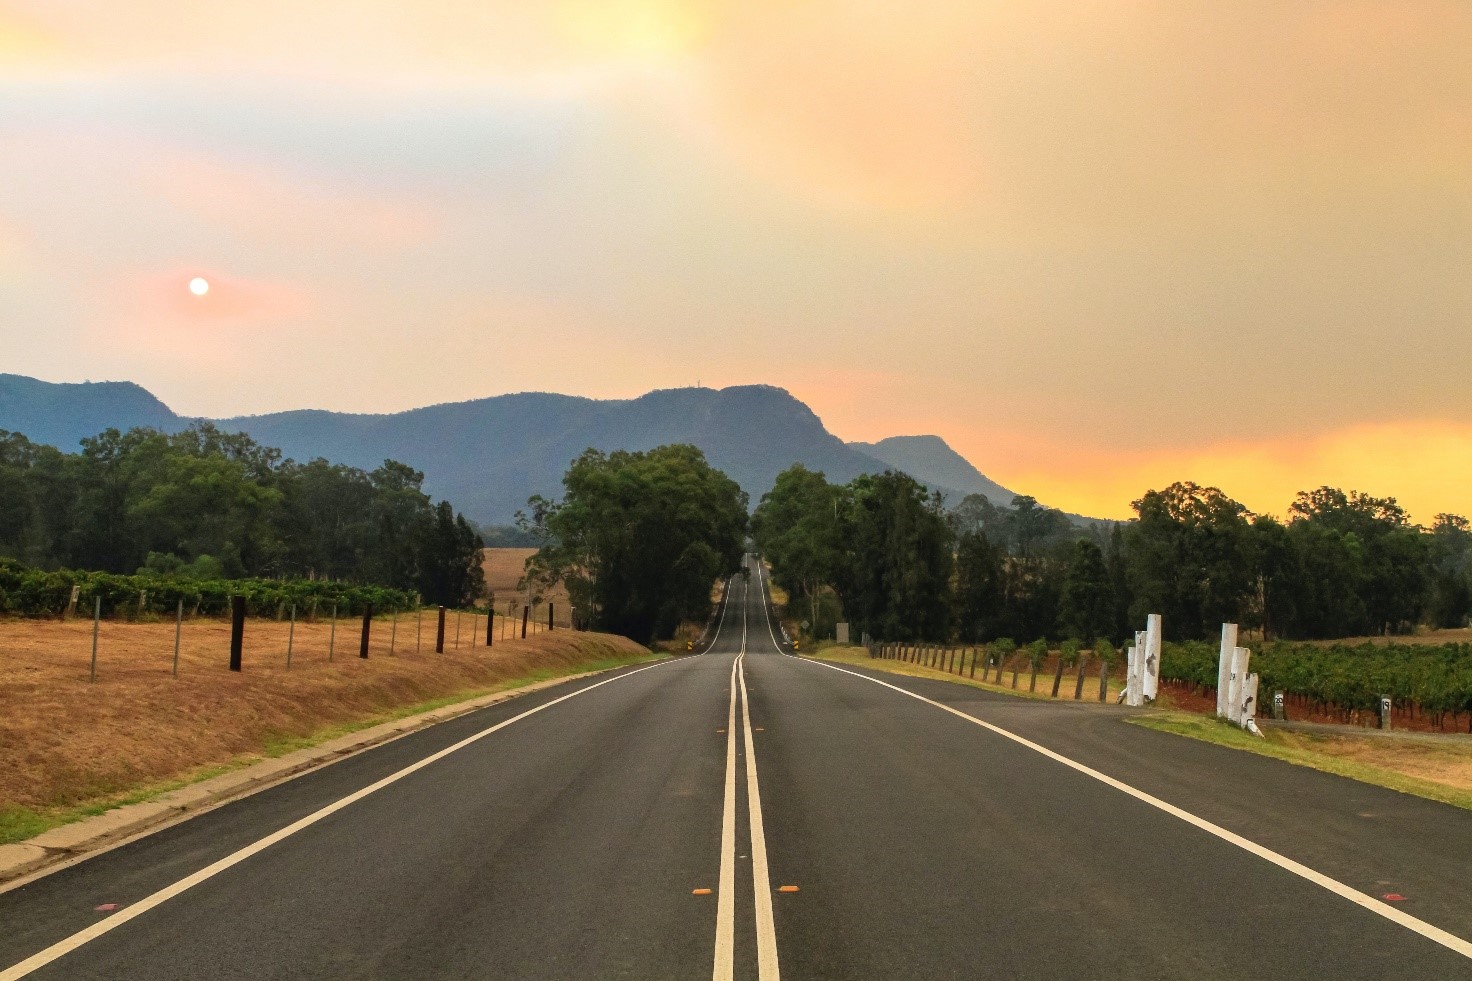 strada vuota in Australia vista al tramonto